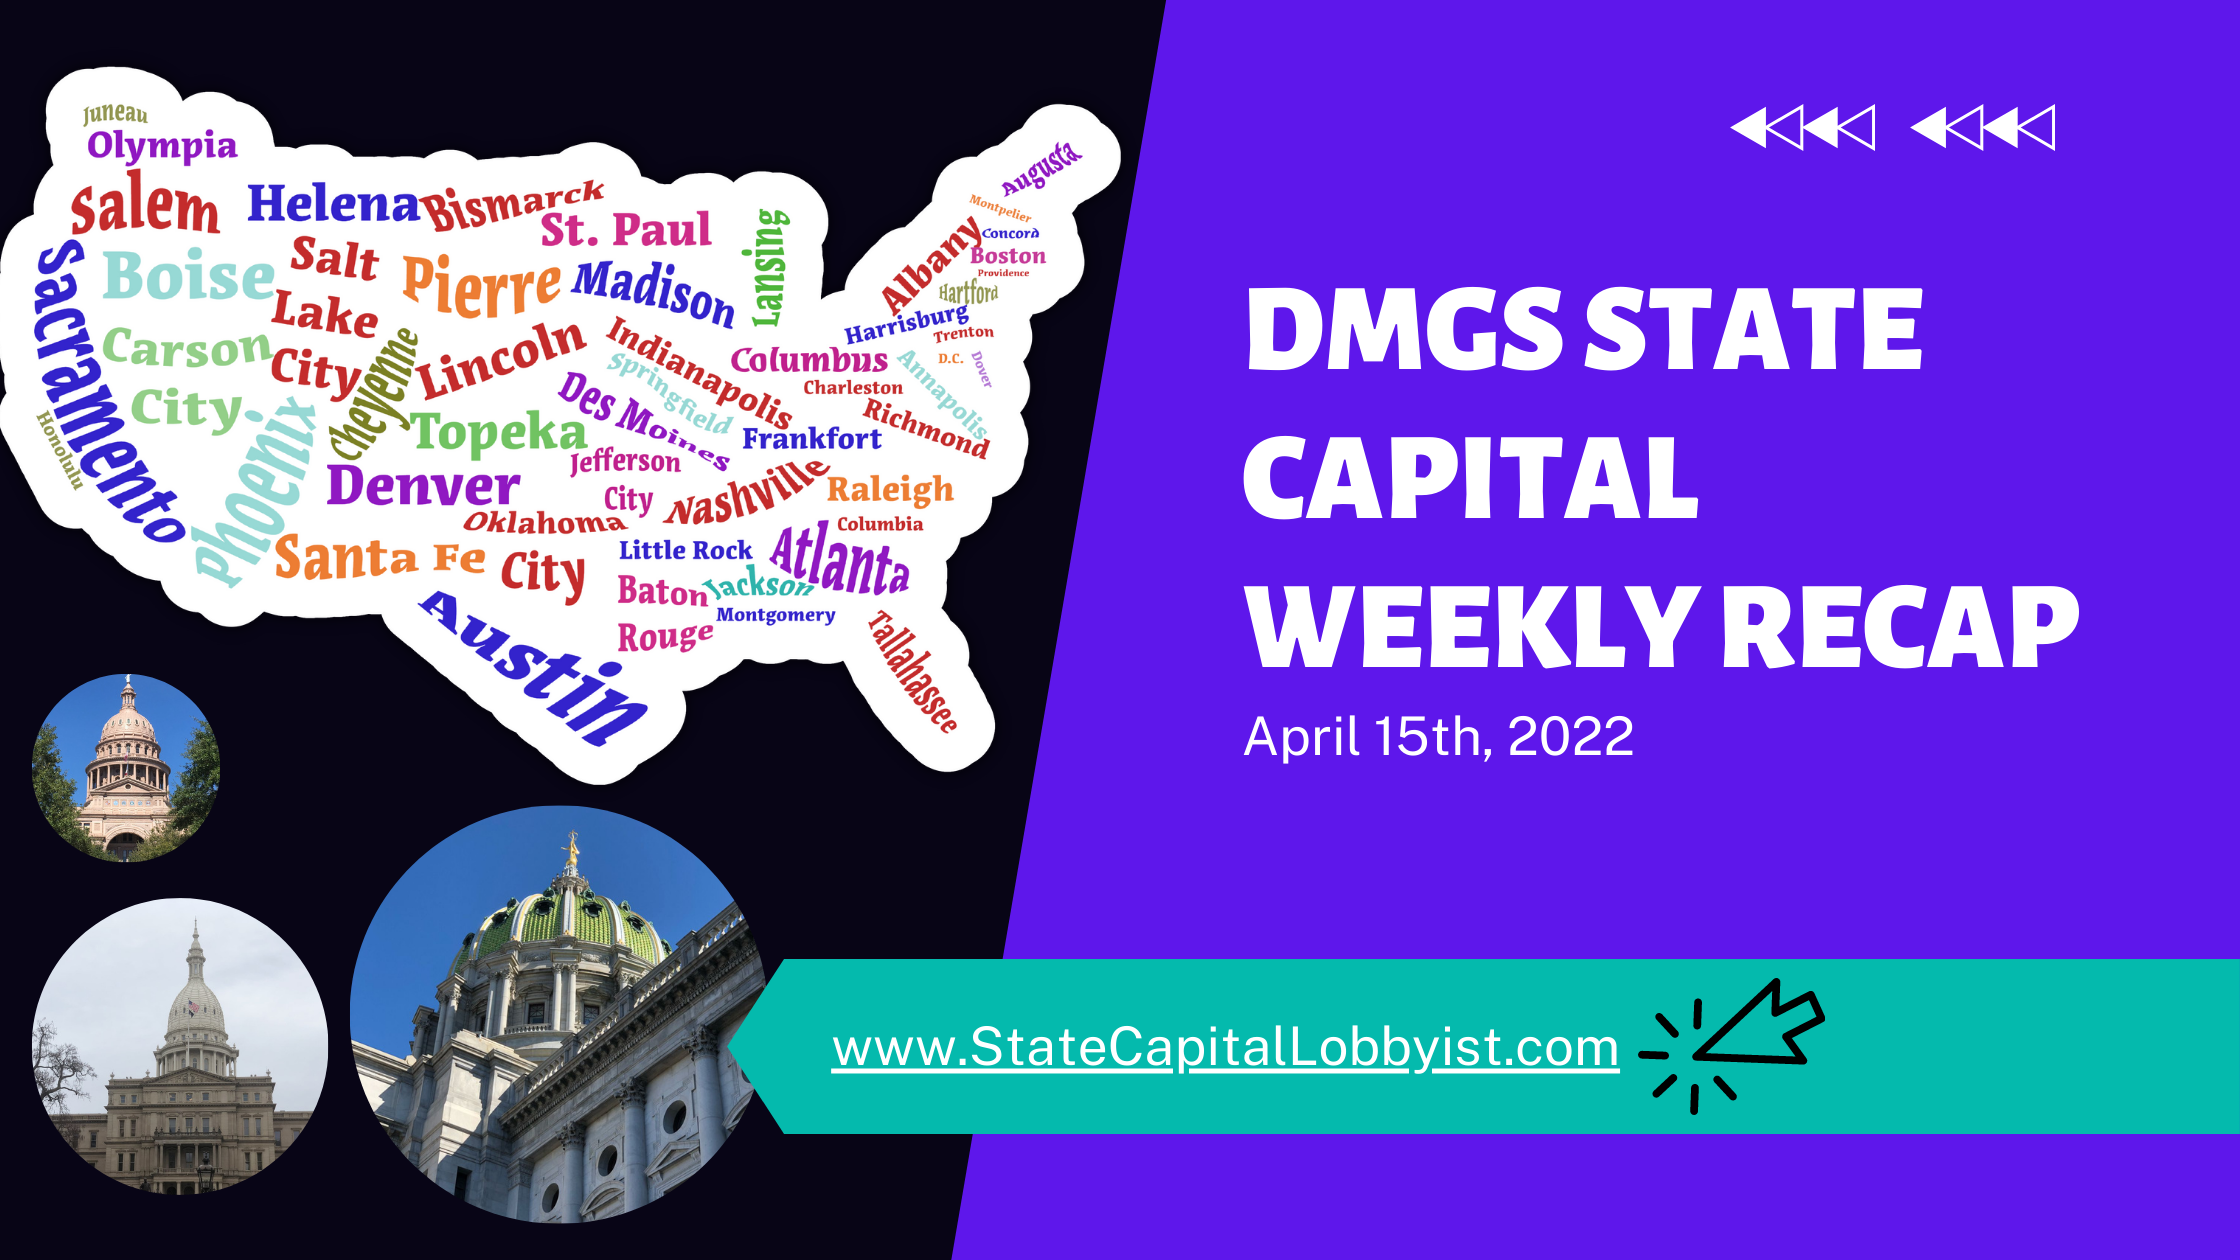 april-15th-dmgs-state-capital-weekly-recap-duane-morris-government